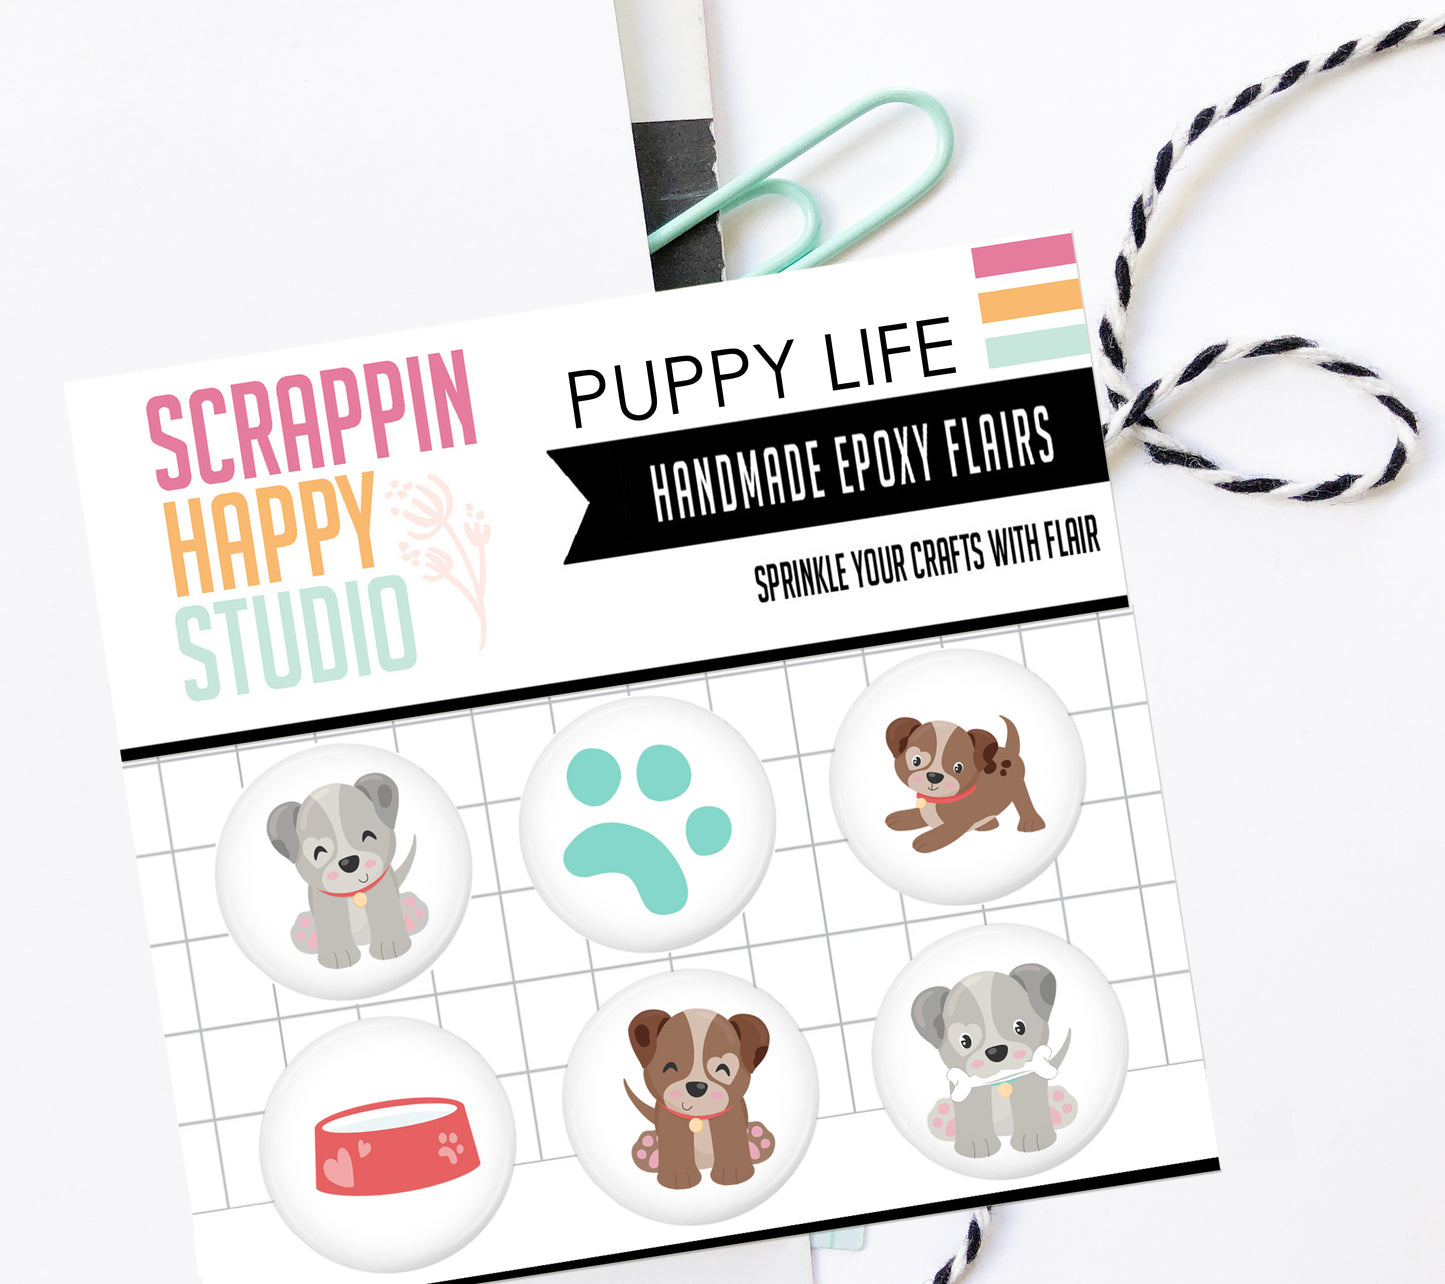 Puppy Life Epoxy Flair